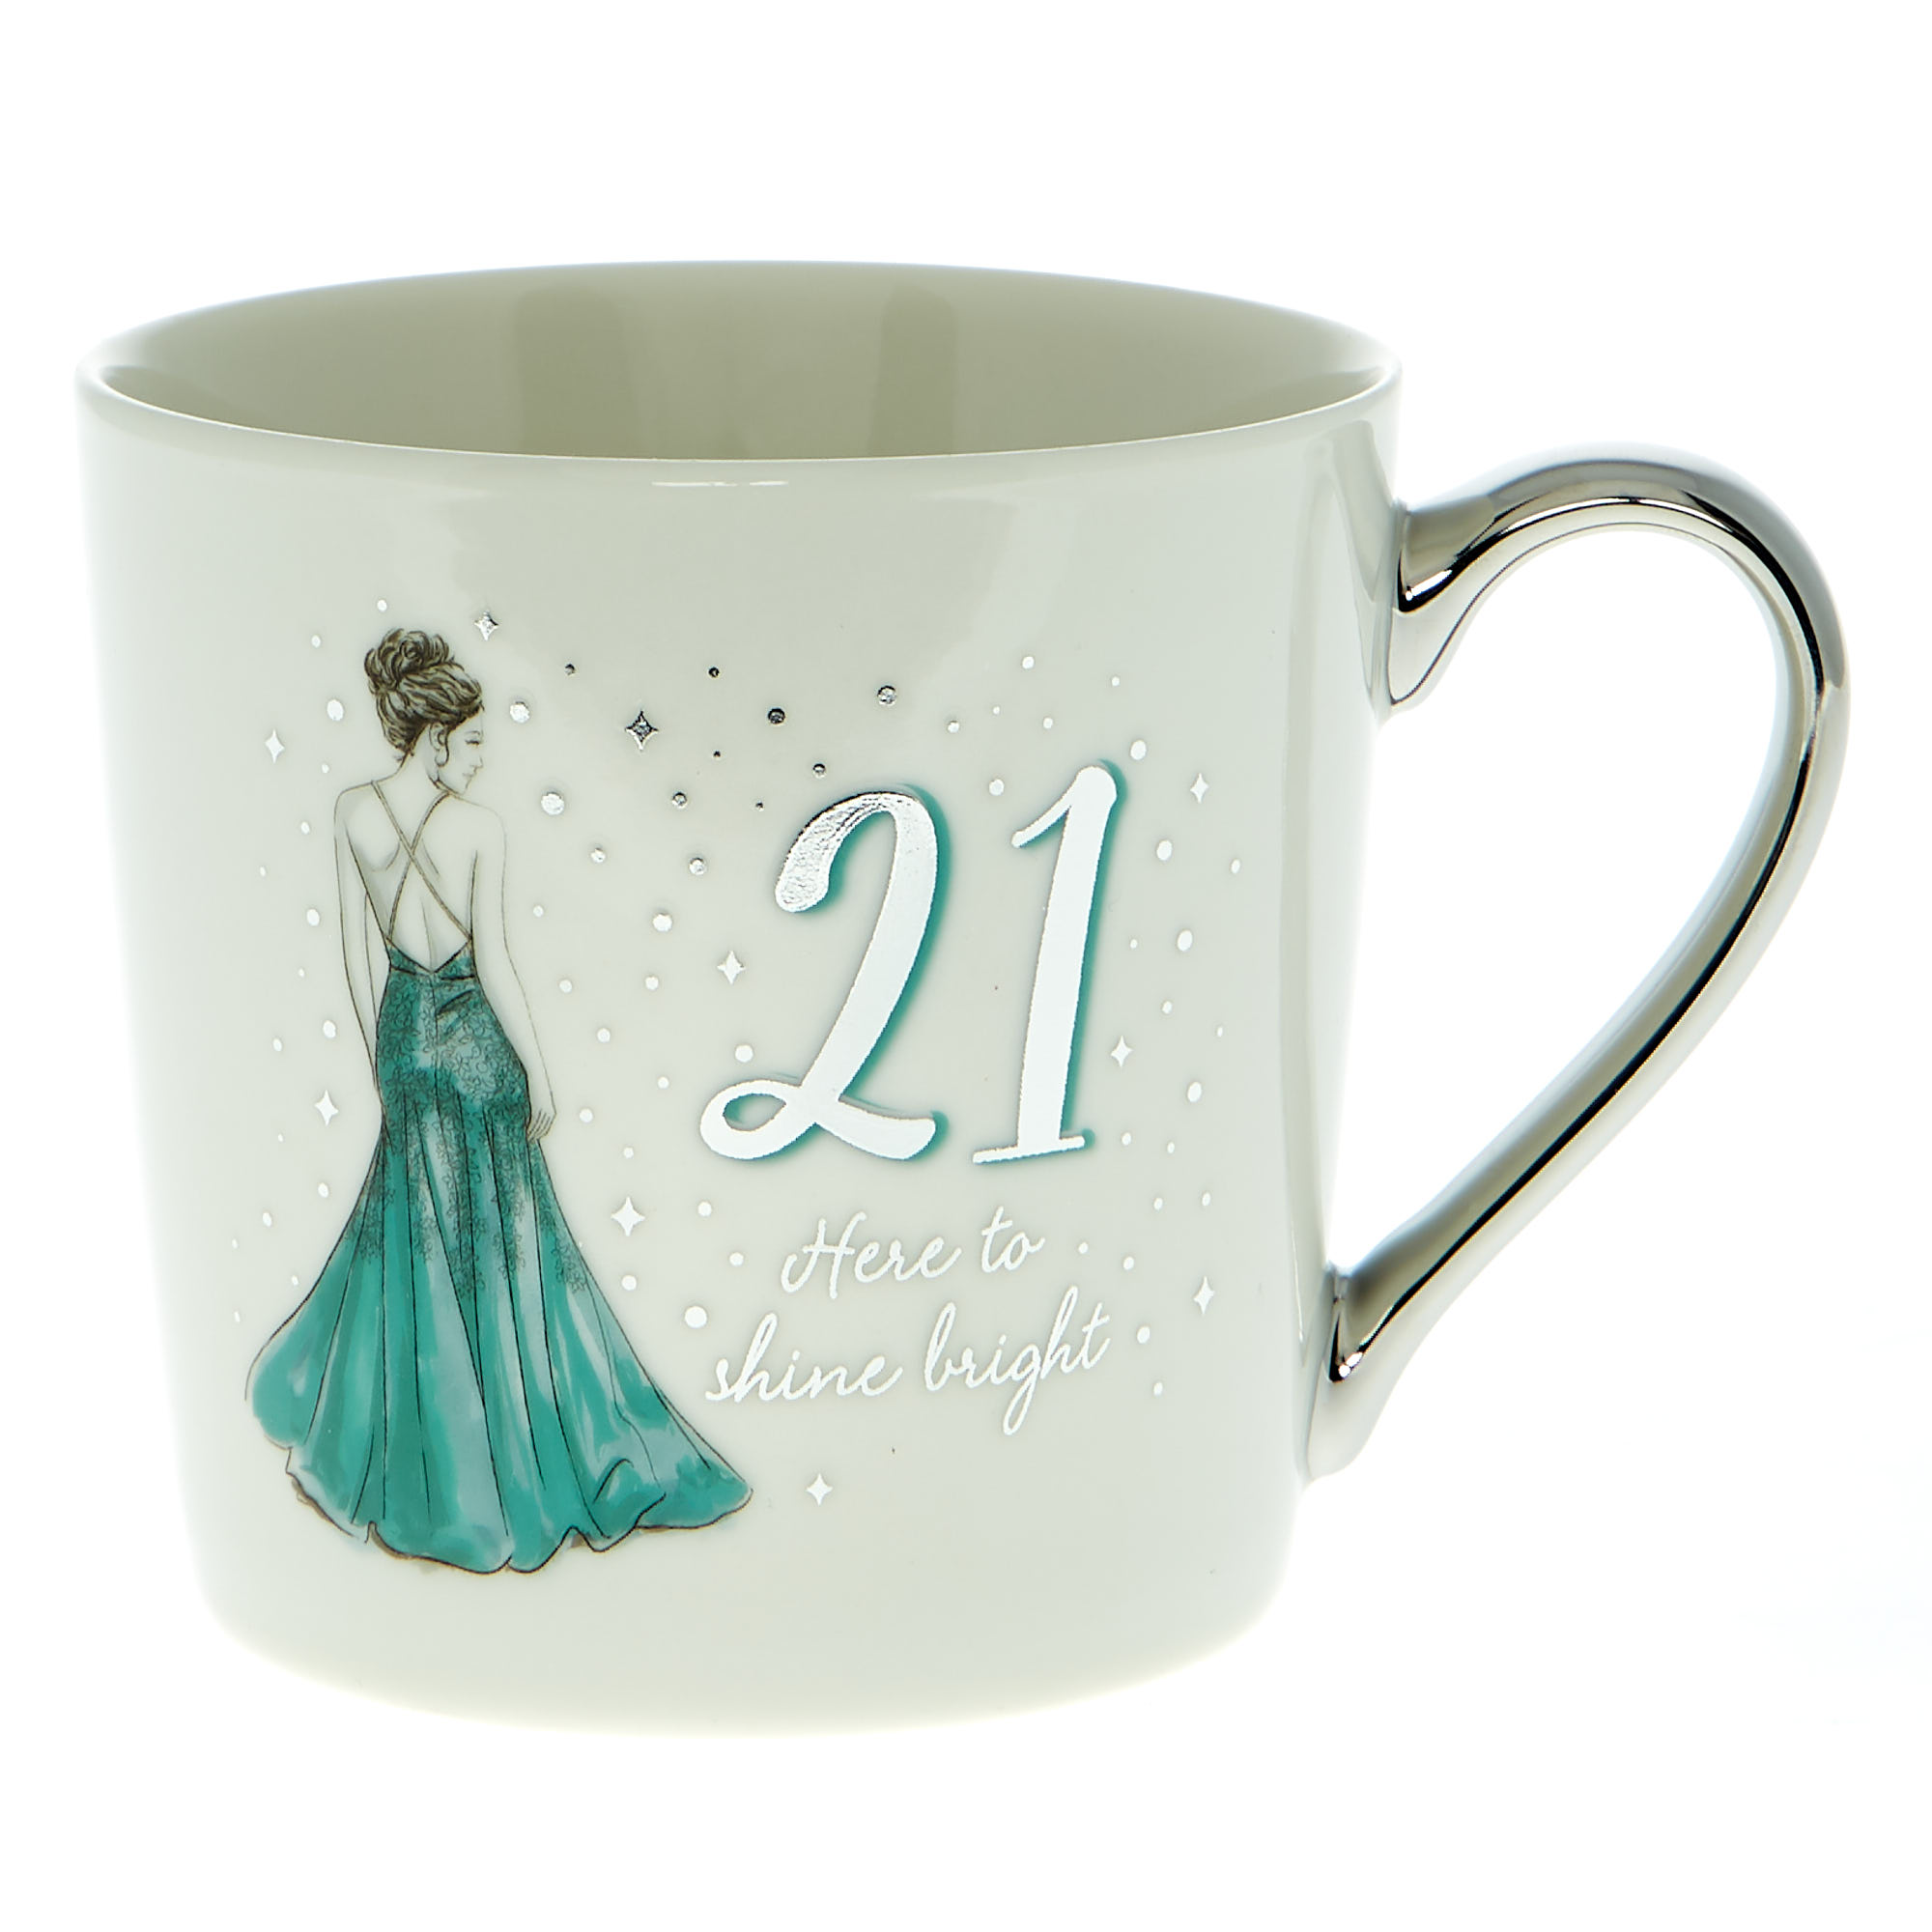 21 Here To Shine Bright Mug